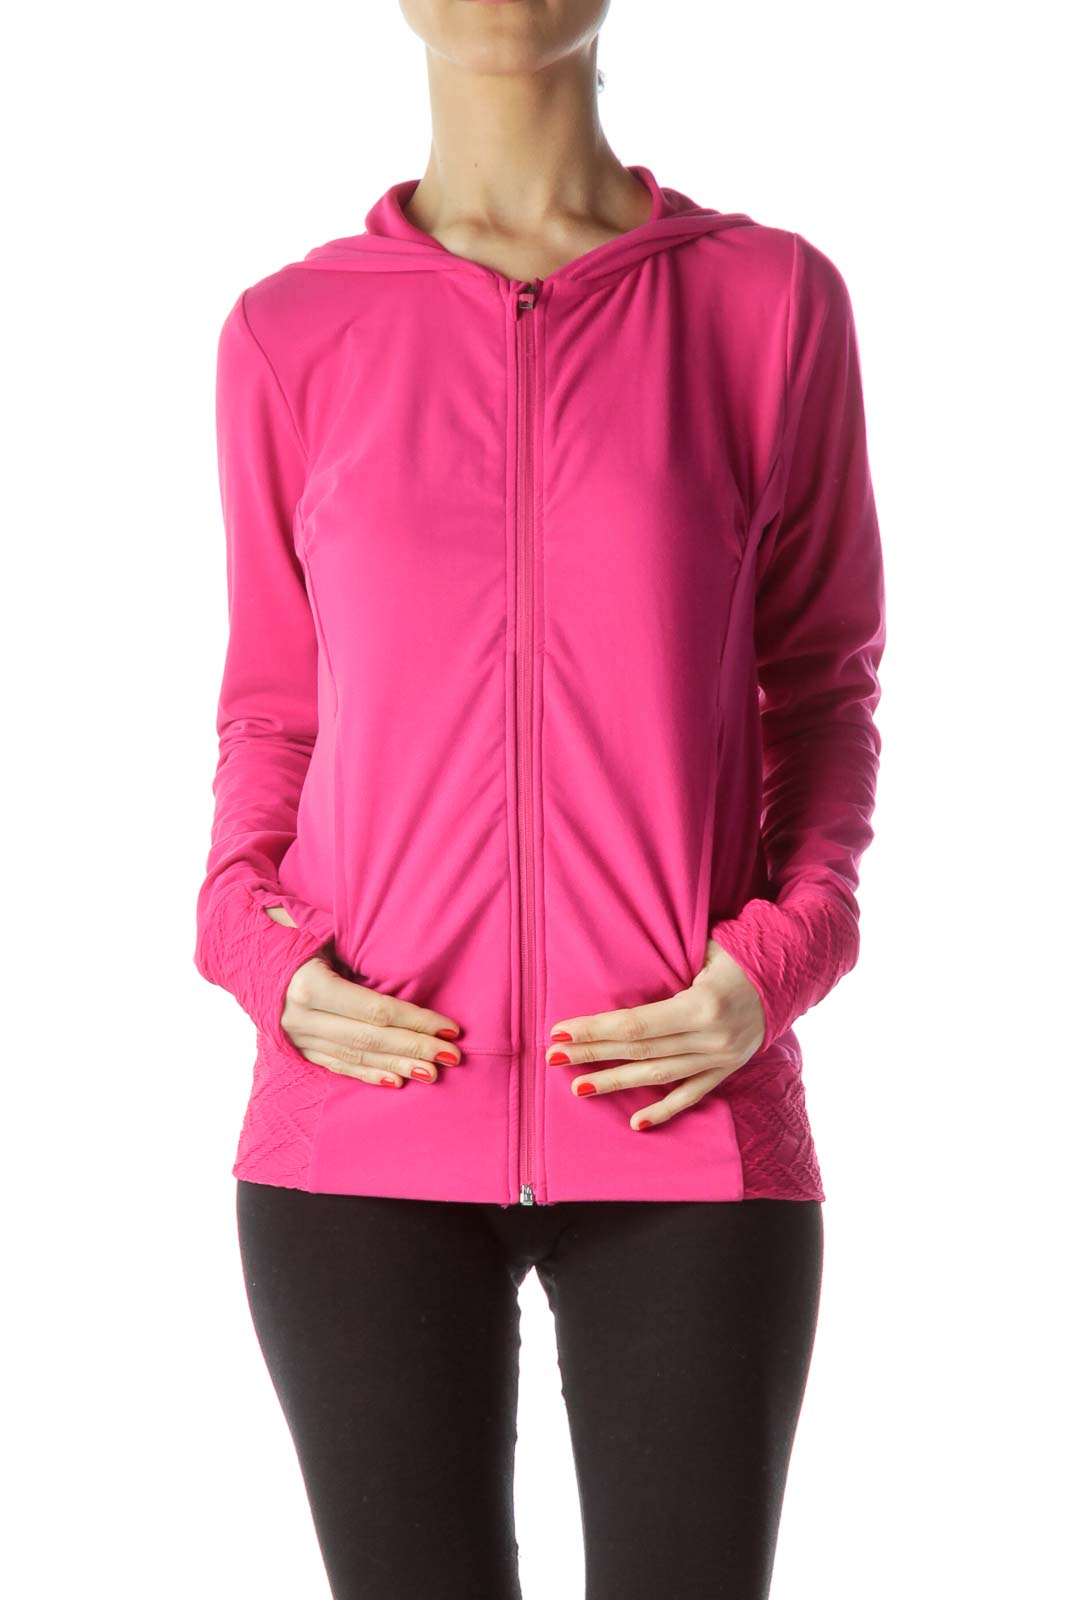 Magenta Pink Hooded Zippered Thumbhole Sports Jacket Front